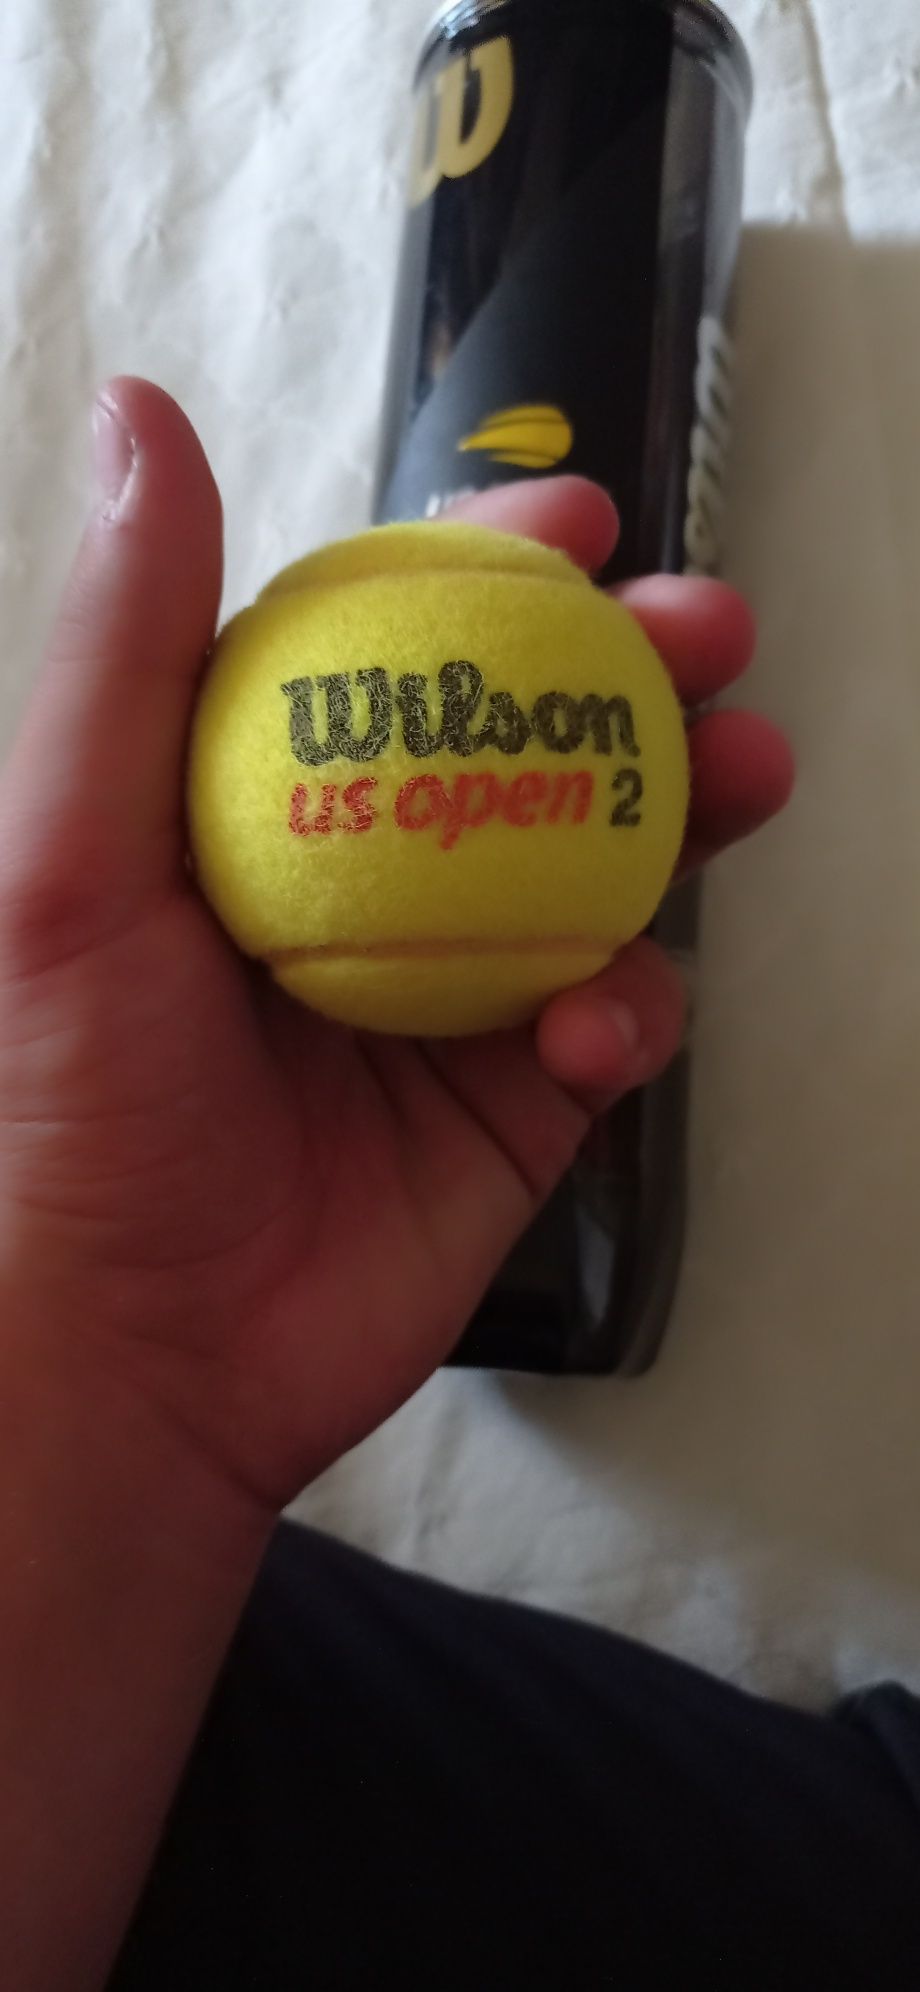 Bolas de tênis Wilson já Open speed